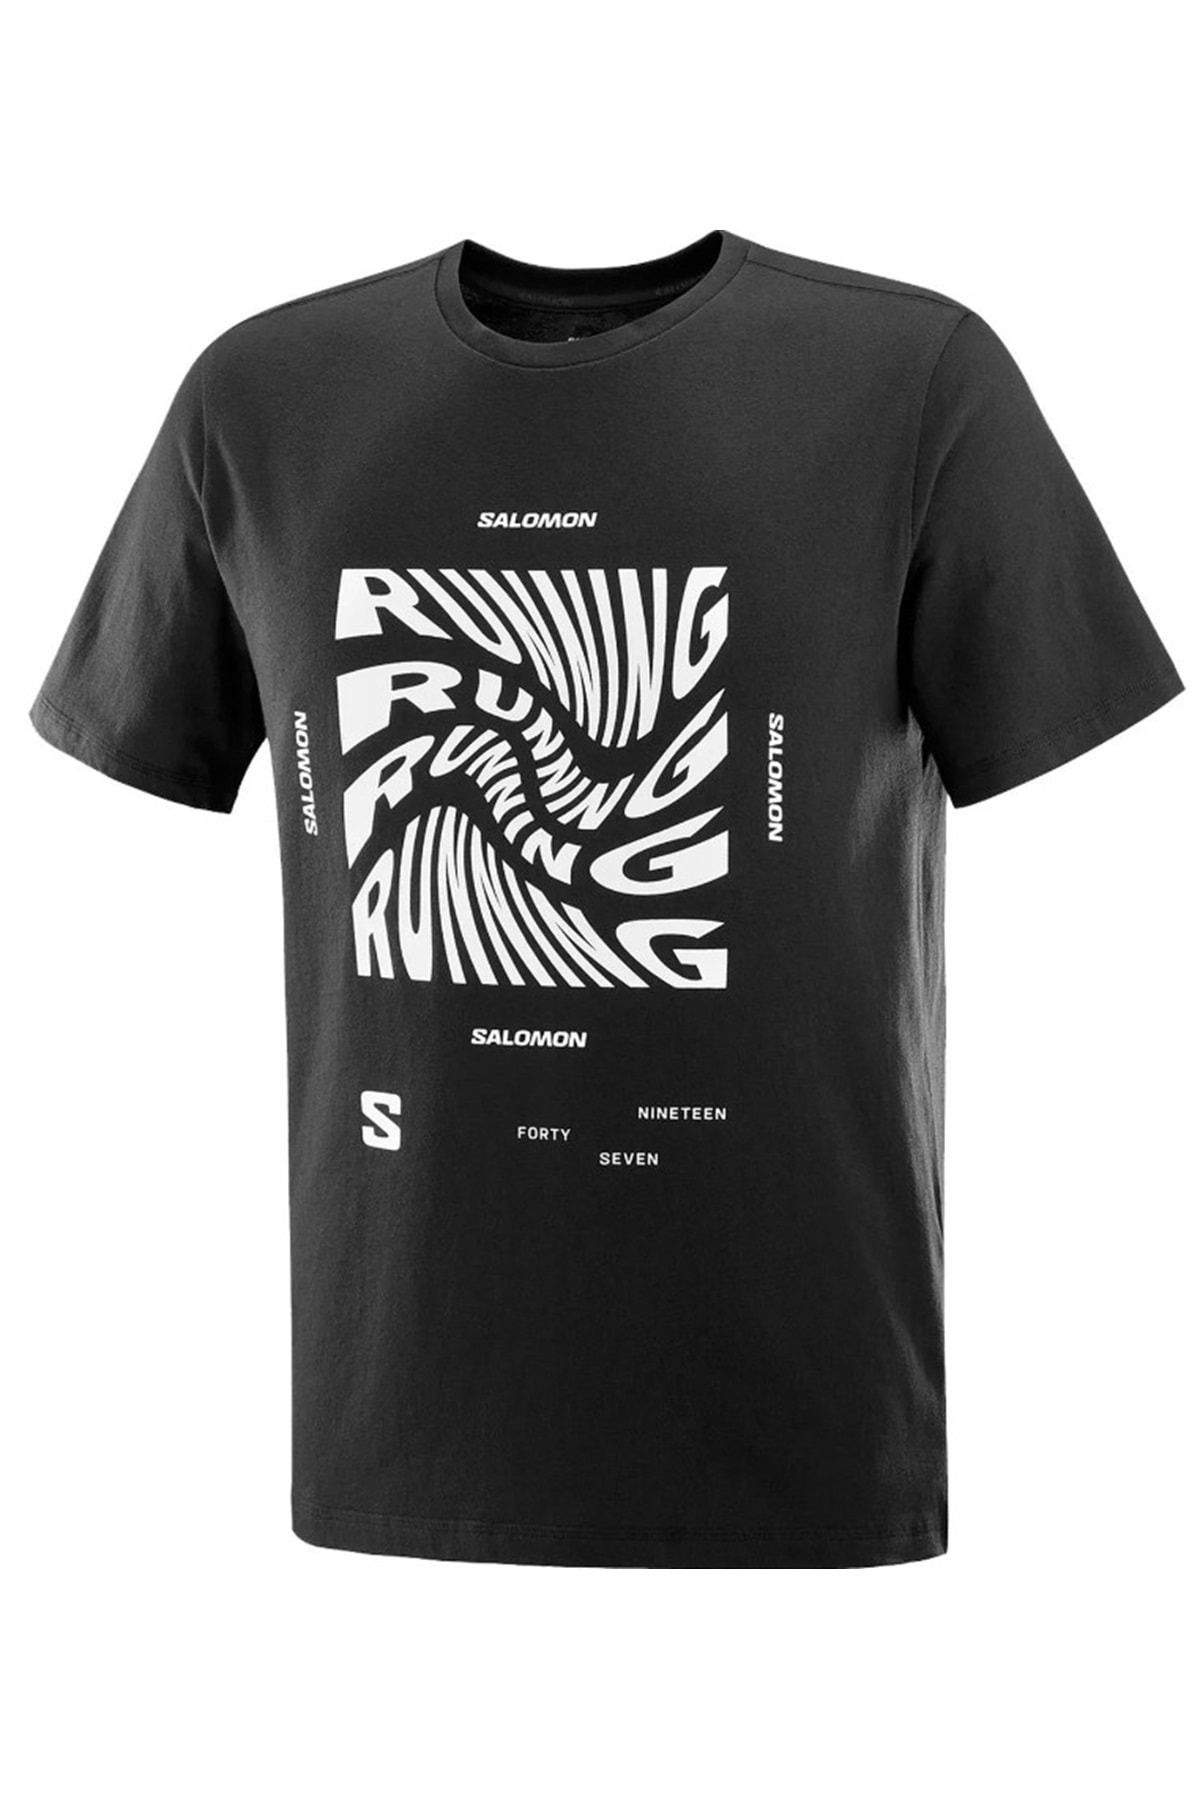 Salomon Lc2218800 Running Graphic Ss Tee Tişört Erkek T-shirt Siyah